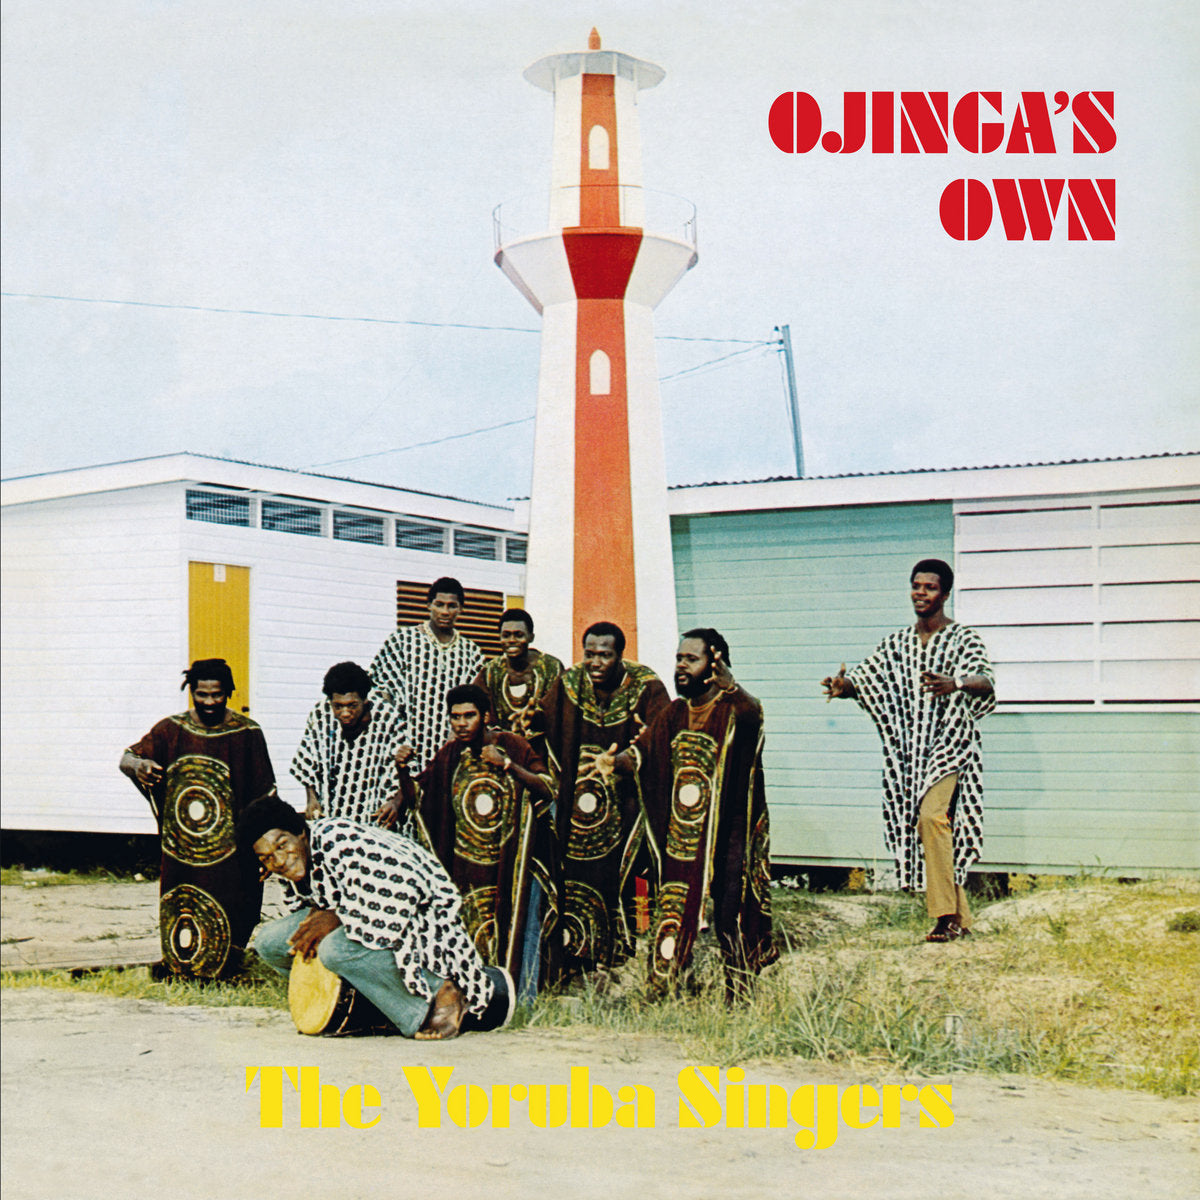 Yoruba Singers, The: Ojinga's Own (Vinyl LP)